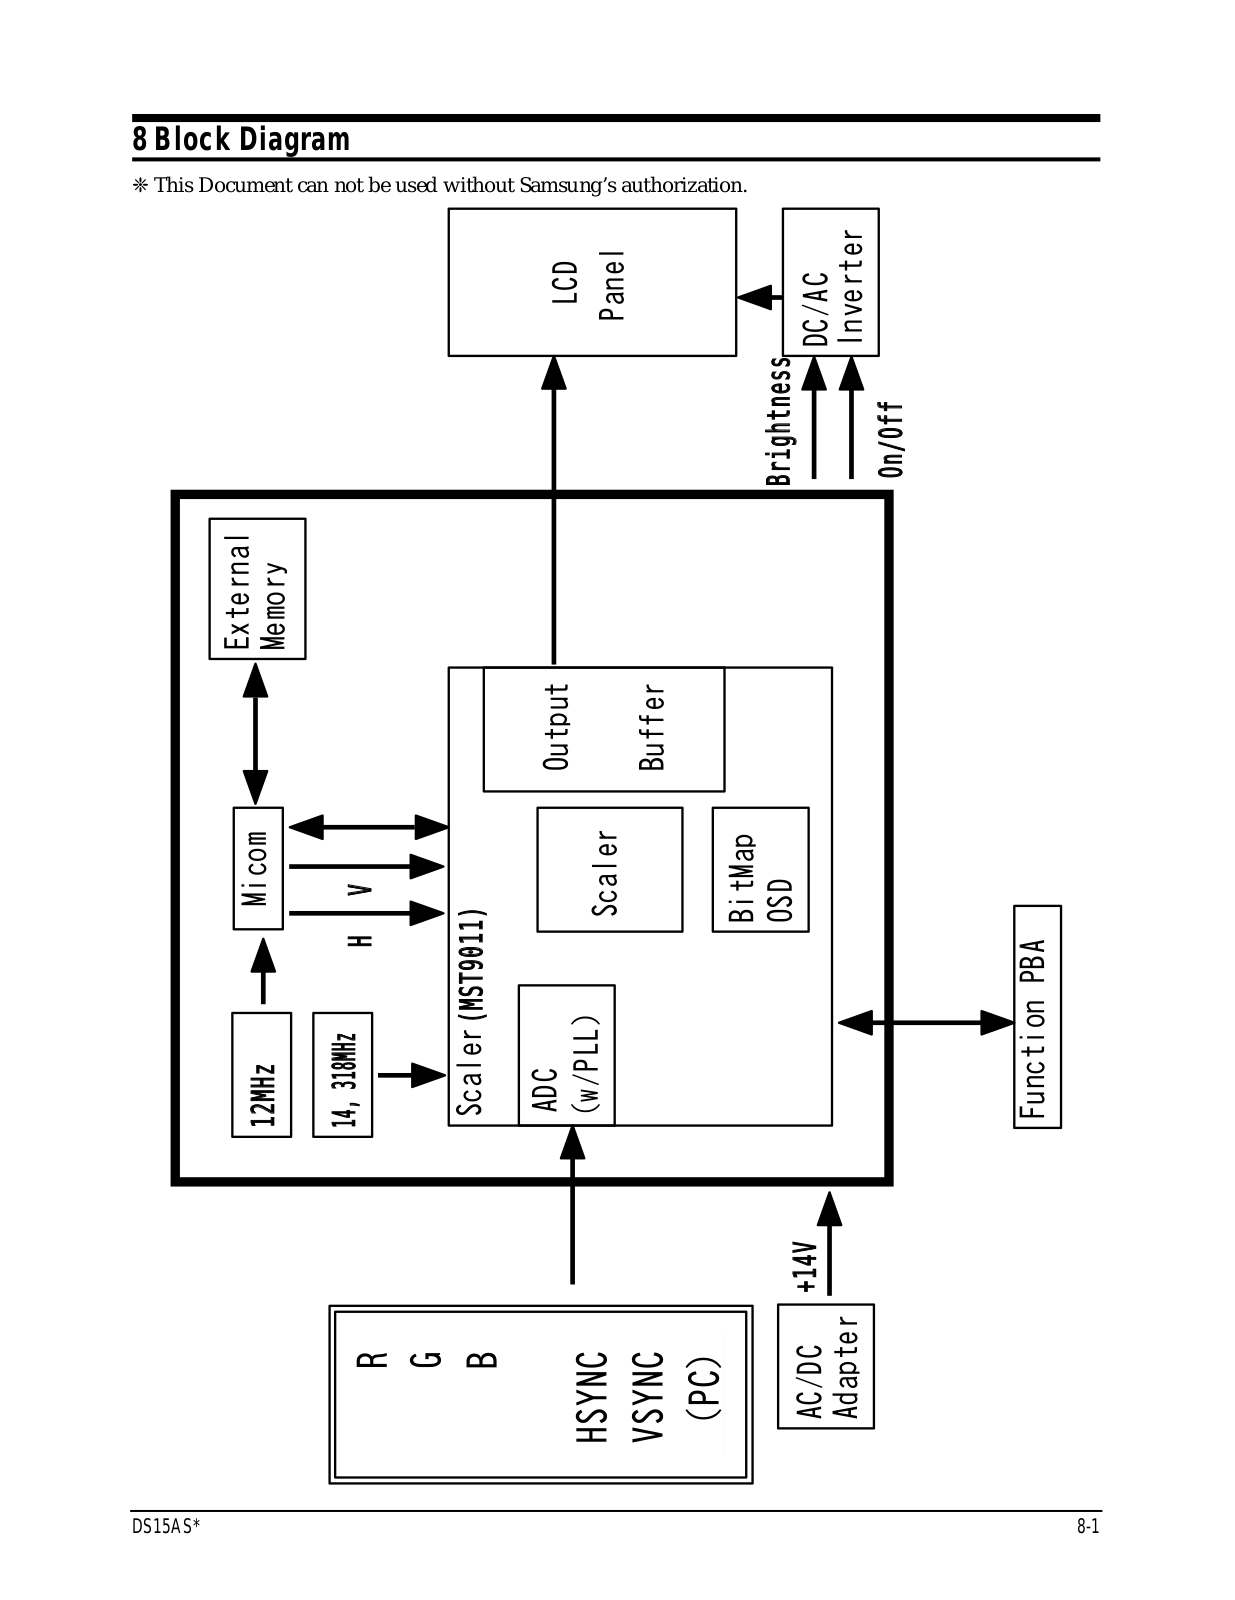 Samsung DS15AS 20030613085155078-8-Block Block Diagram